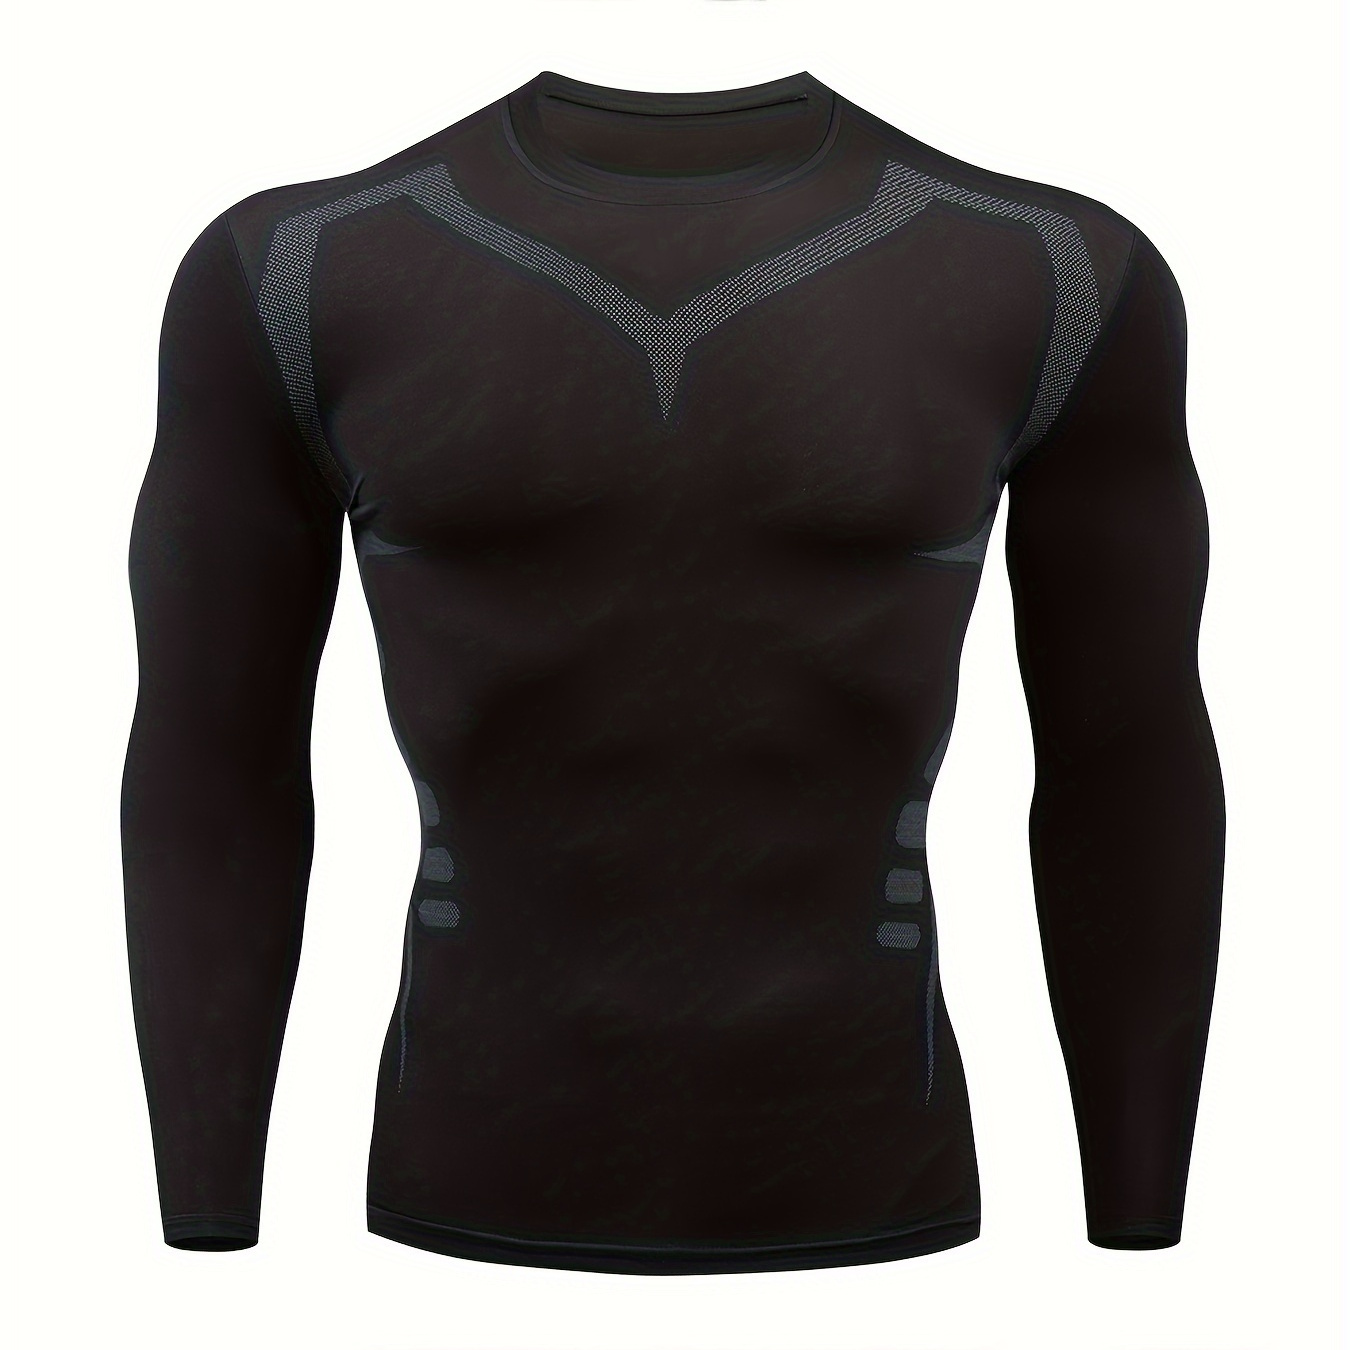 

Irregular Stripe Print Thermal Compression Shirts Men Long Sleeve Athletic Moisture Wicking Baselayer Undershirt Gear Tshirt For Sports Workout